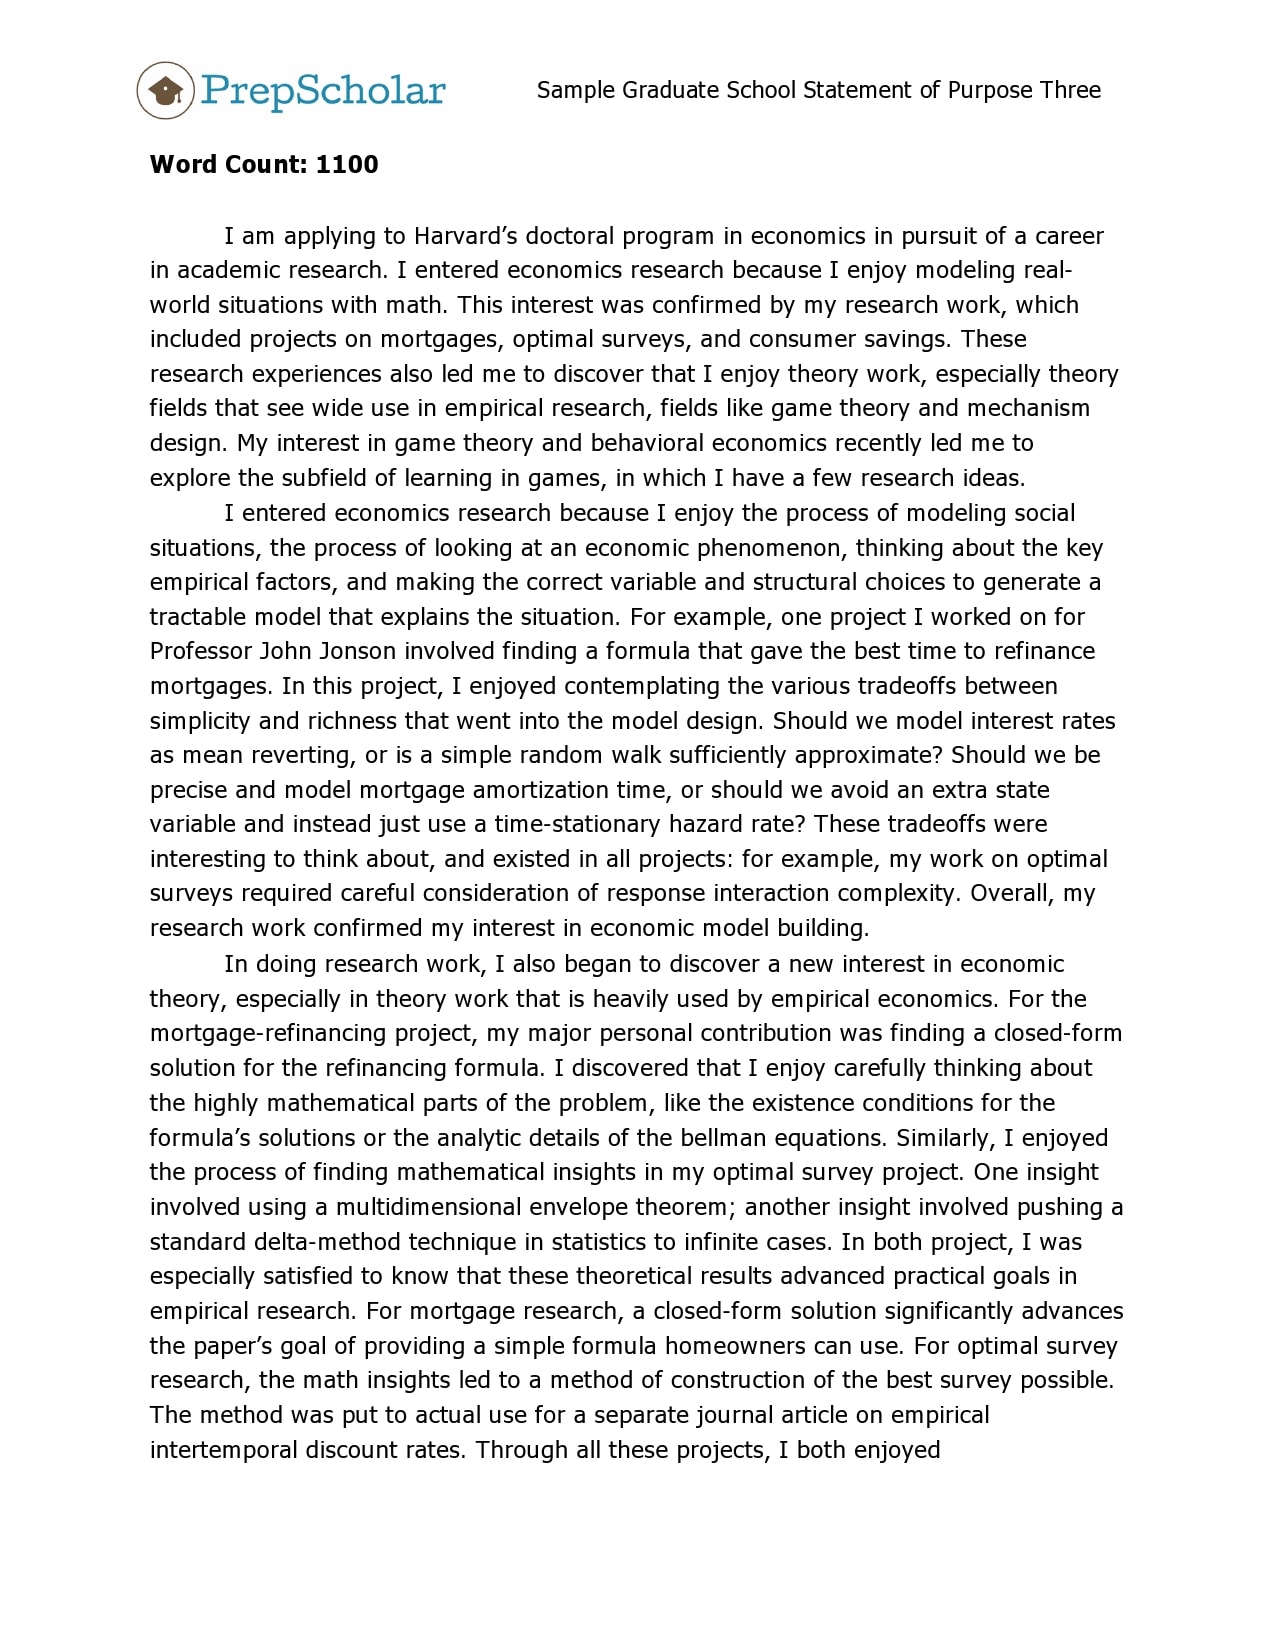 sample statement of purpose for graduate school education